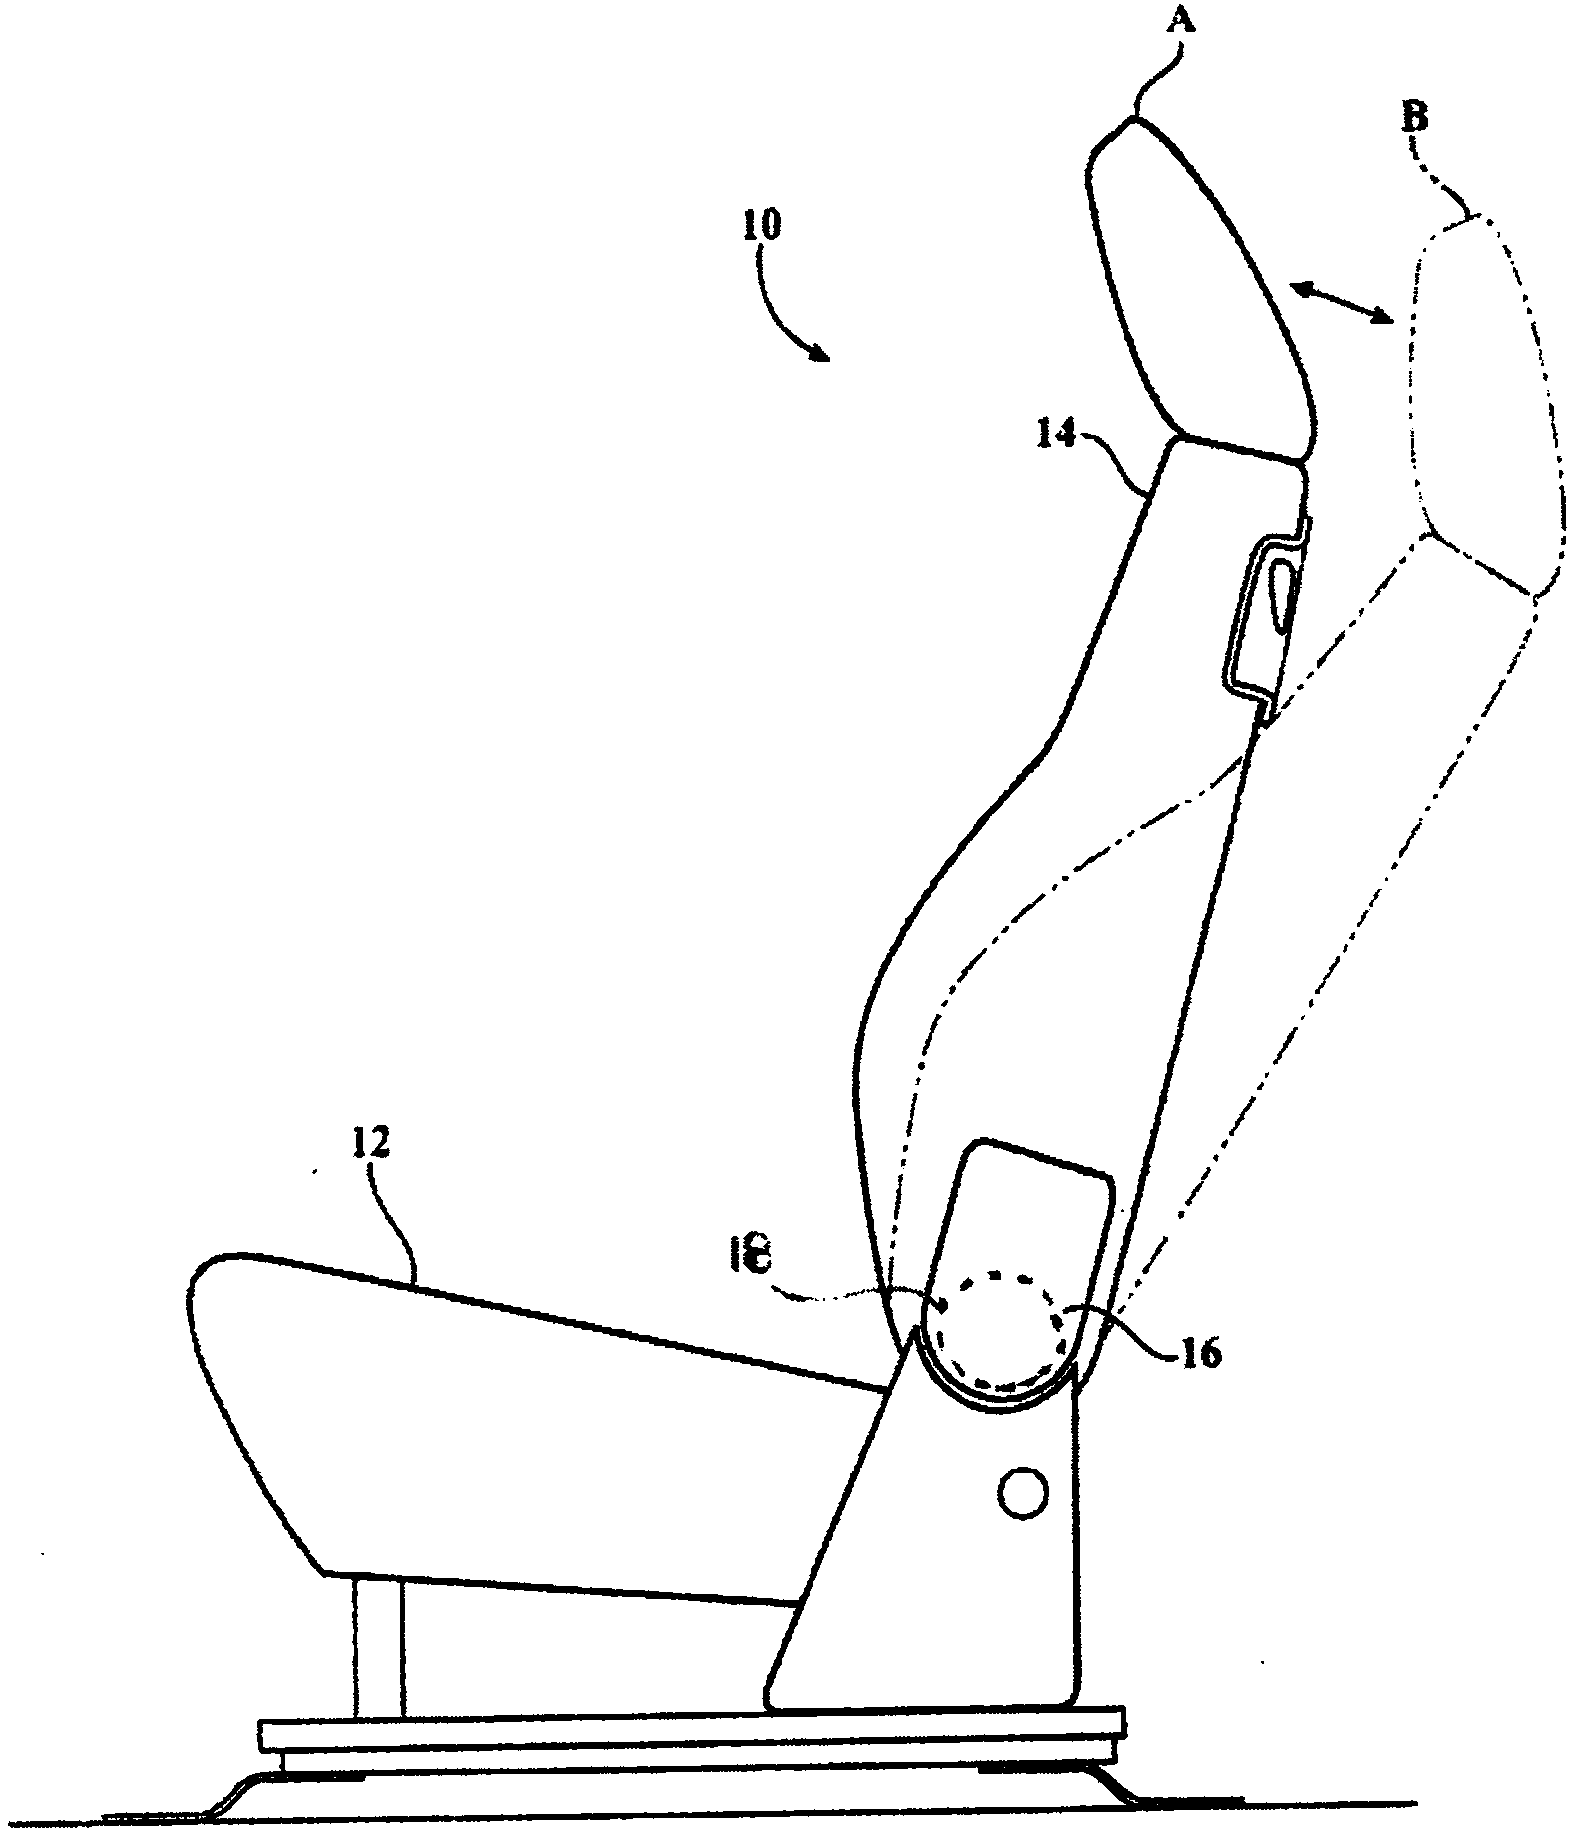 Disc recliner with internal leaf springs